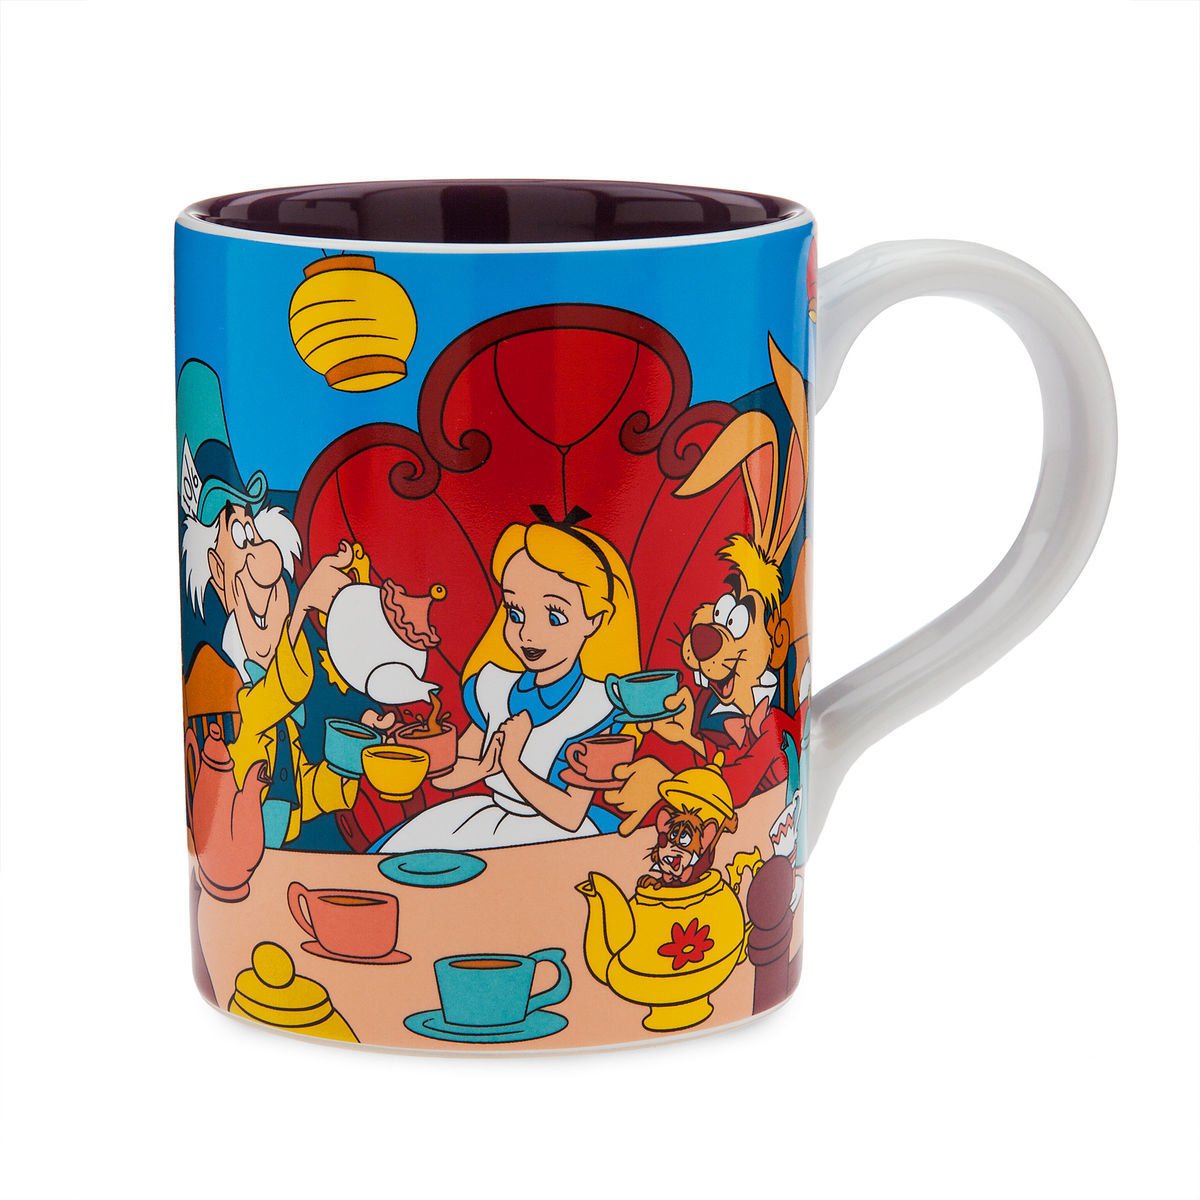 Disney Store Alice in Wonderland Mad Tea Party Mug New 2018